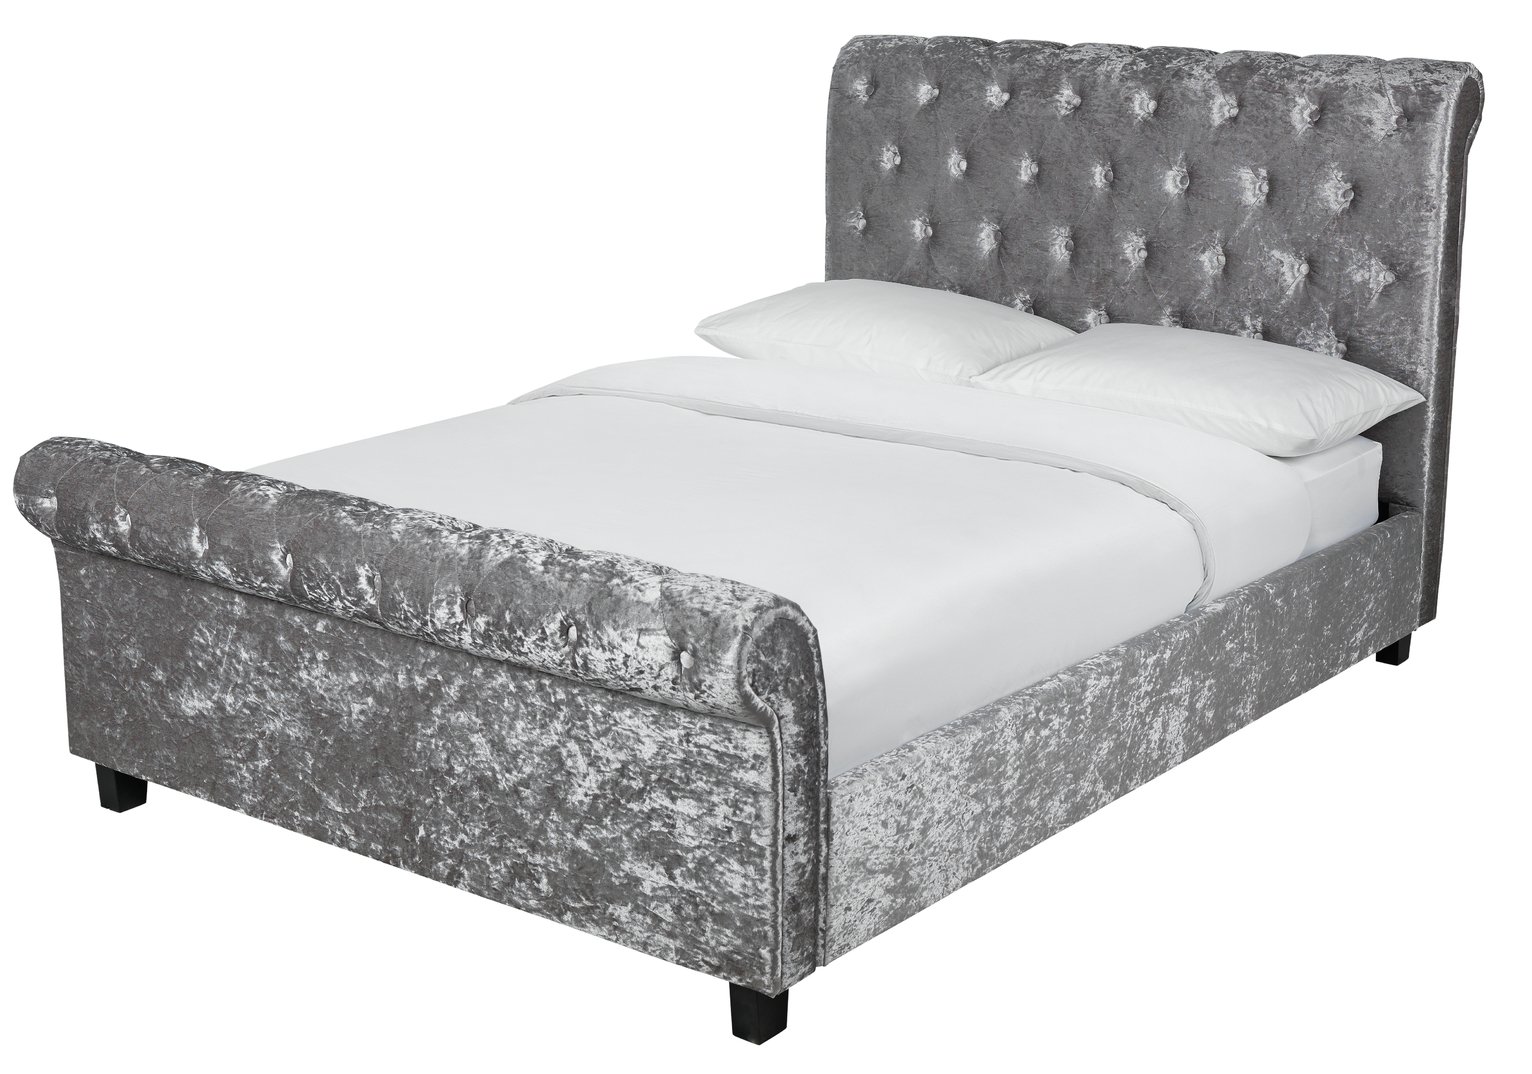 Argos Home Penelope Double Crushed Velvet Bed Frame - Silver